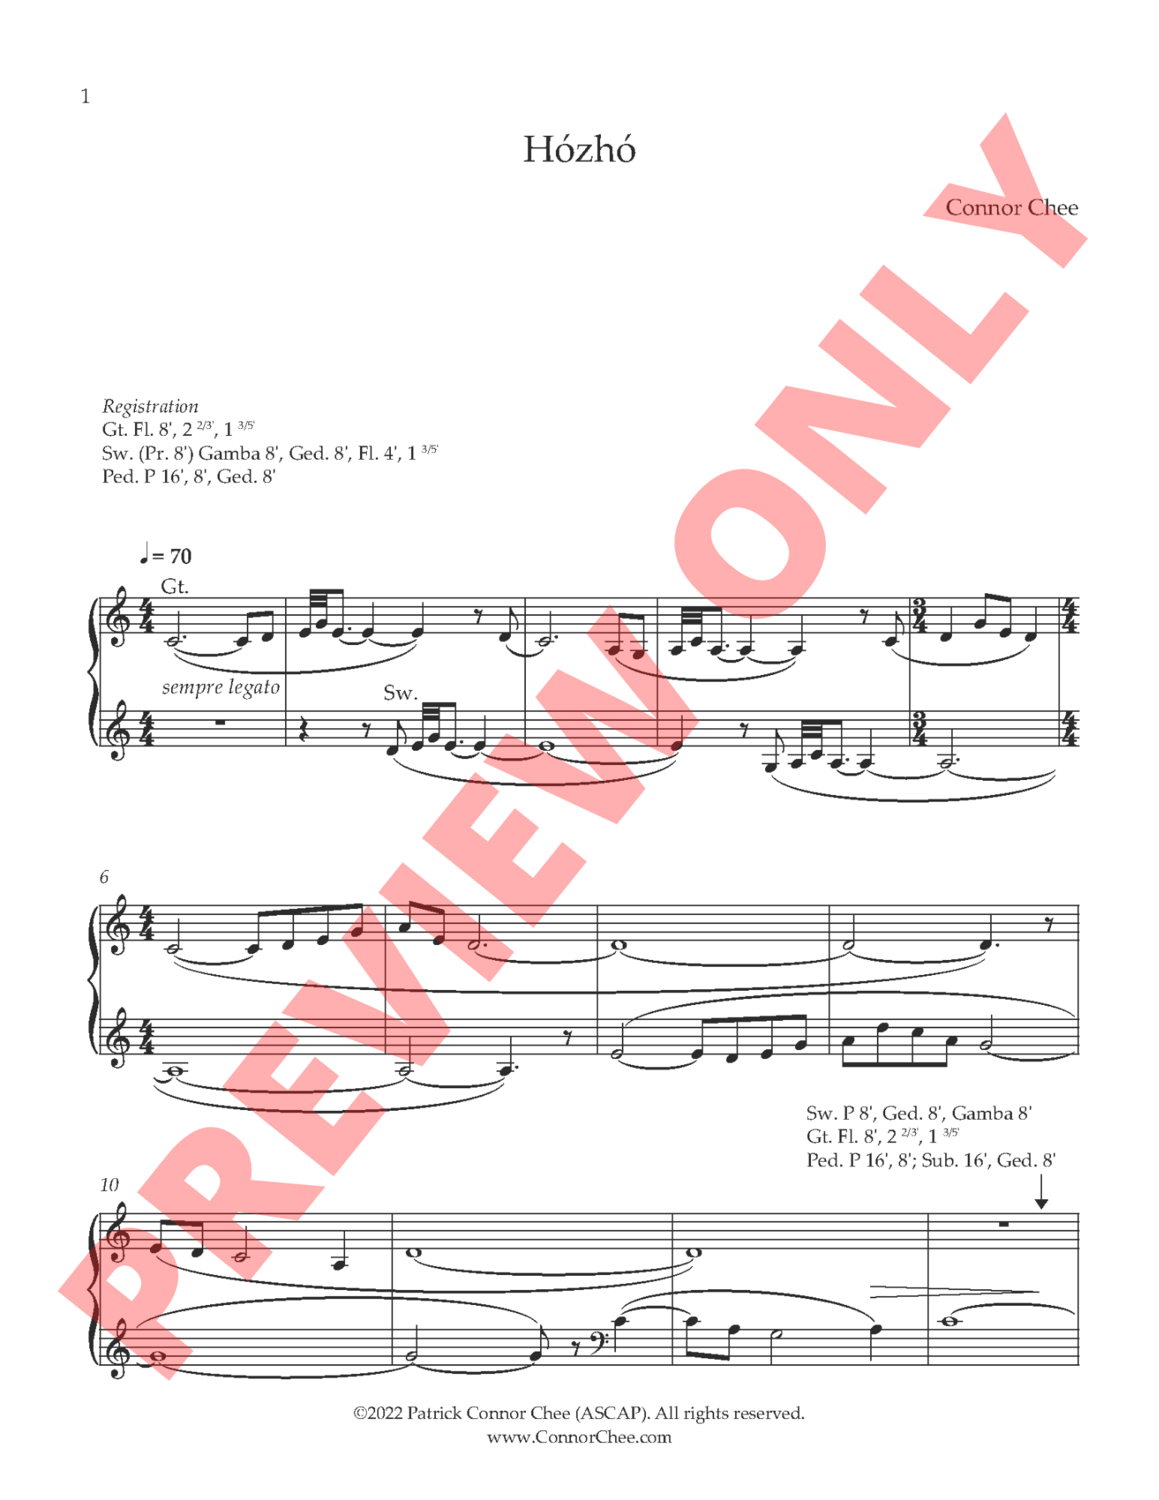 Digital Sheet Music - Hózhó for Organ Solo